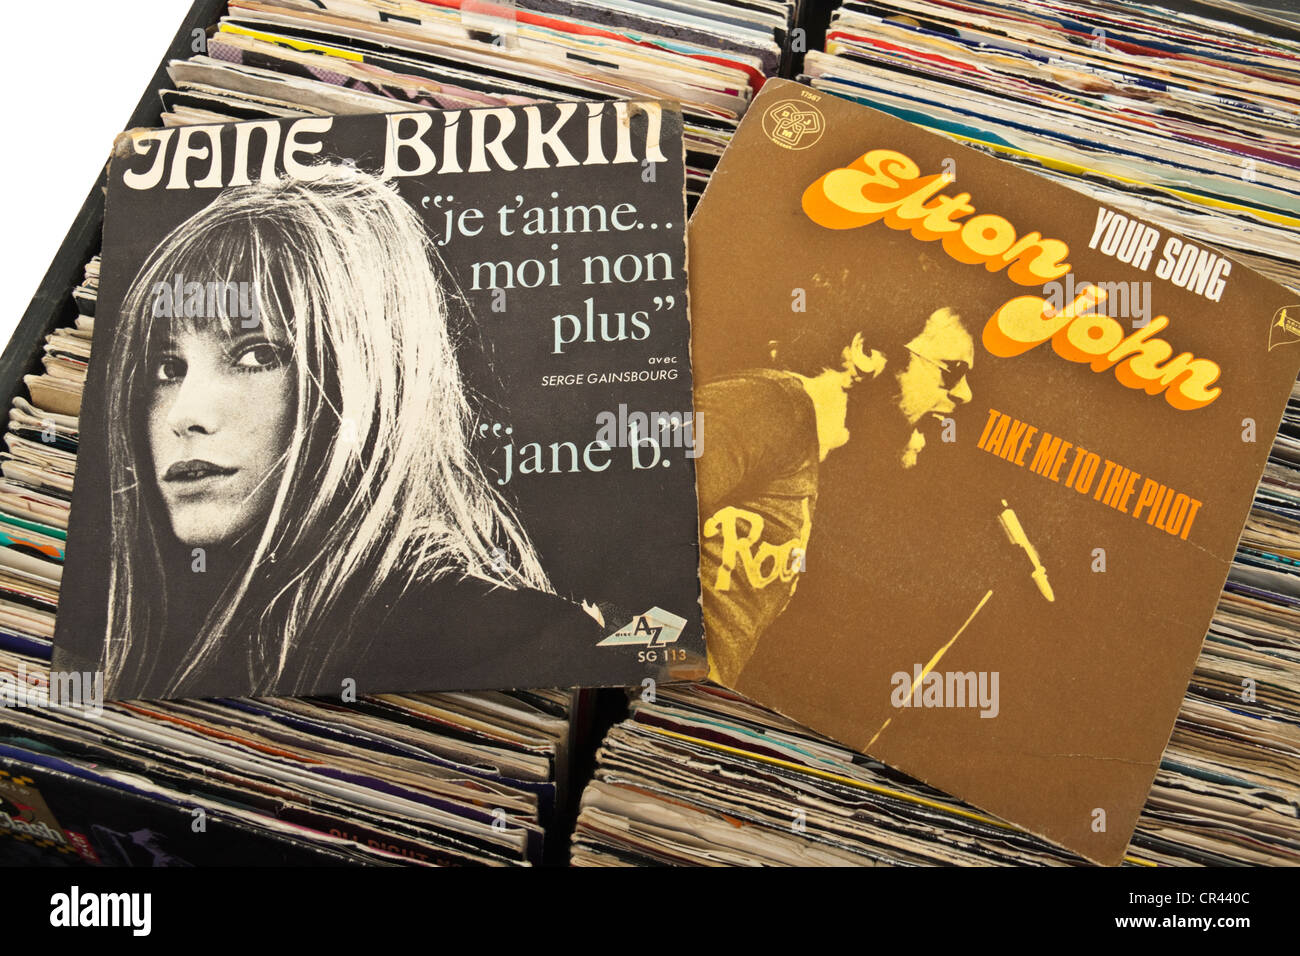 Vintage-Kollektion von Vinyl-Schallplatten-7' Stockfoto